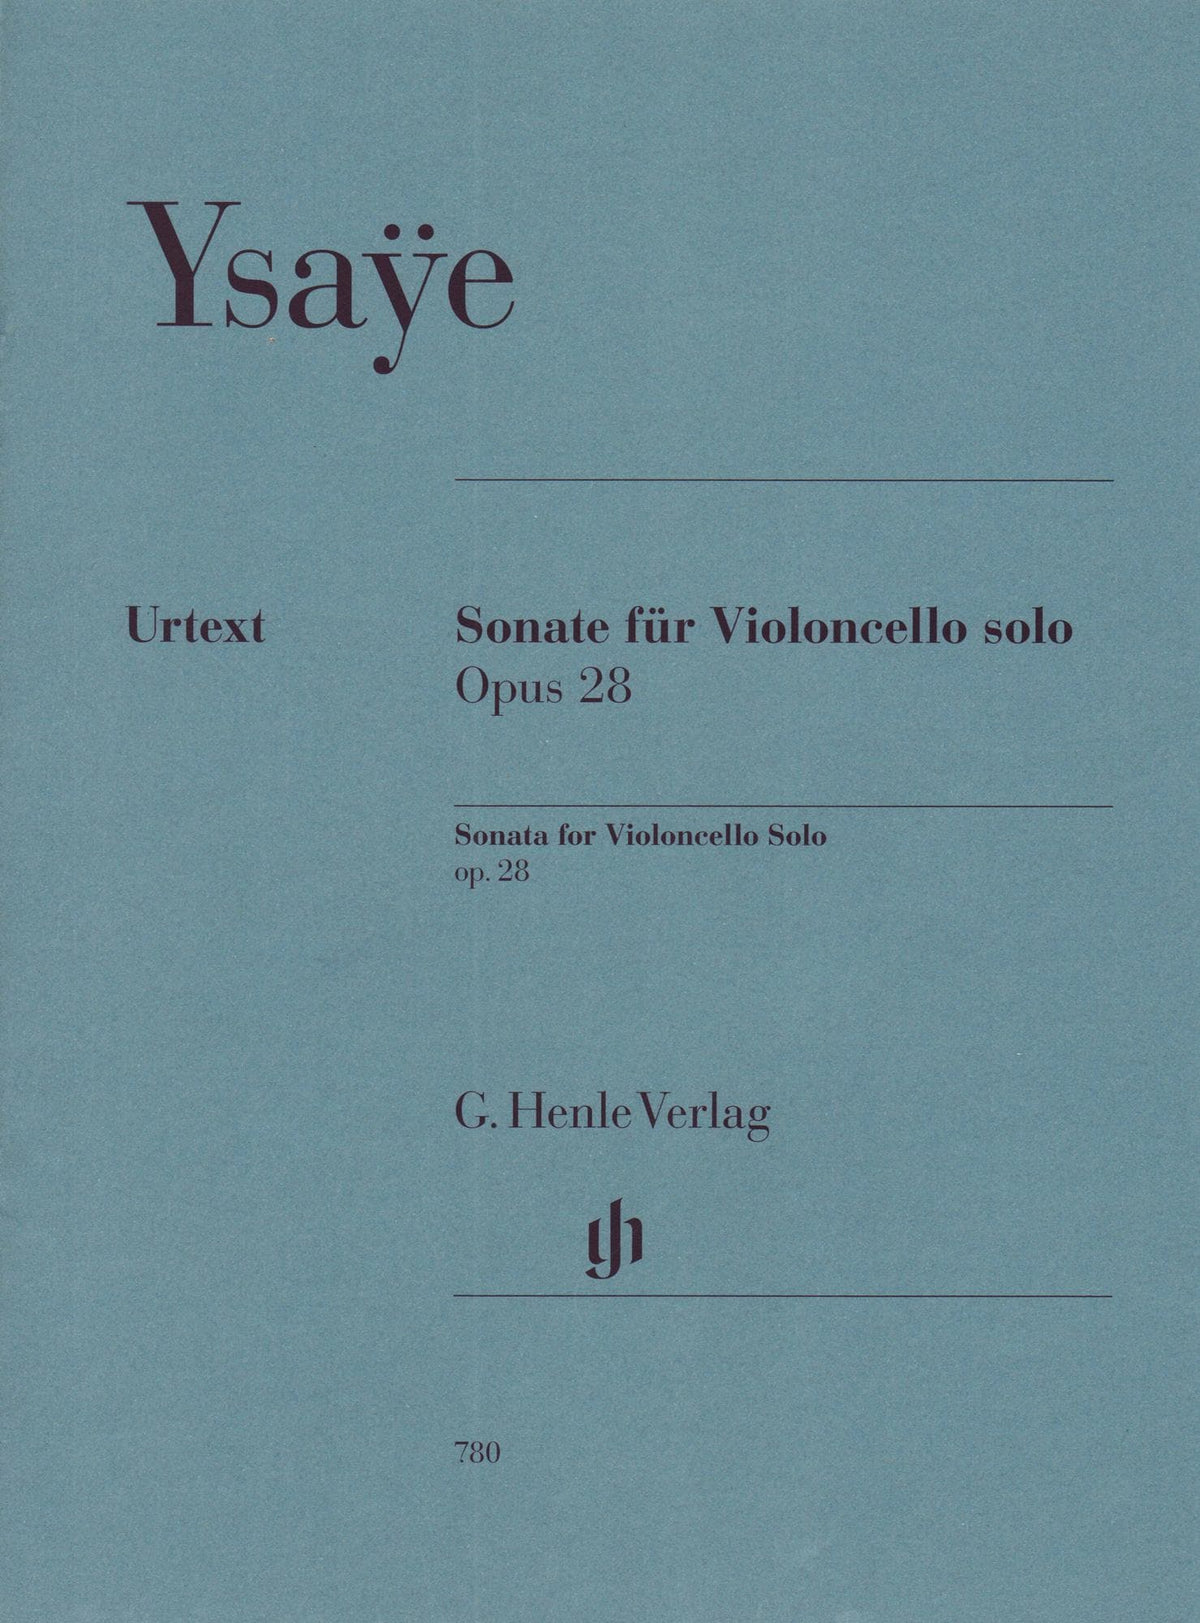 Ysaÿe, Eugène - Sonata for Solo Cello, Op 28 URTEXT Published by G Henle Verlag